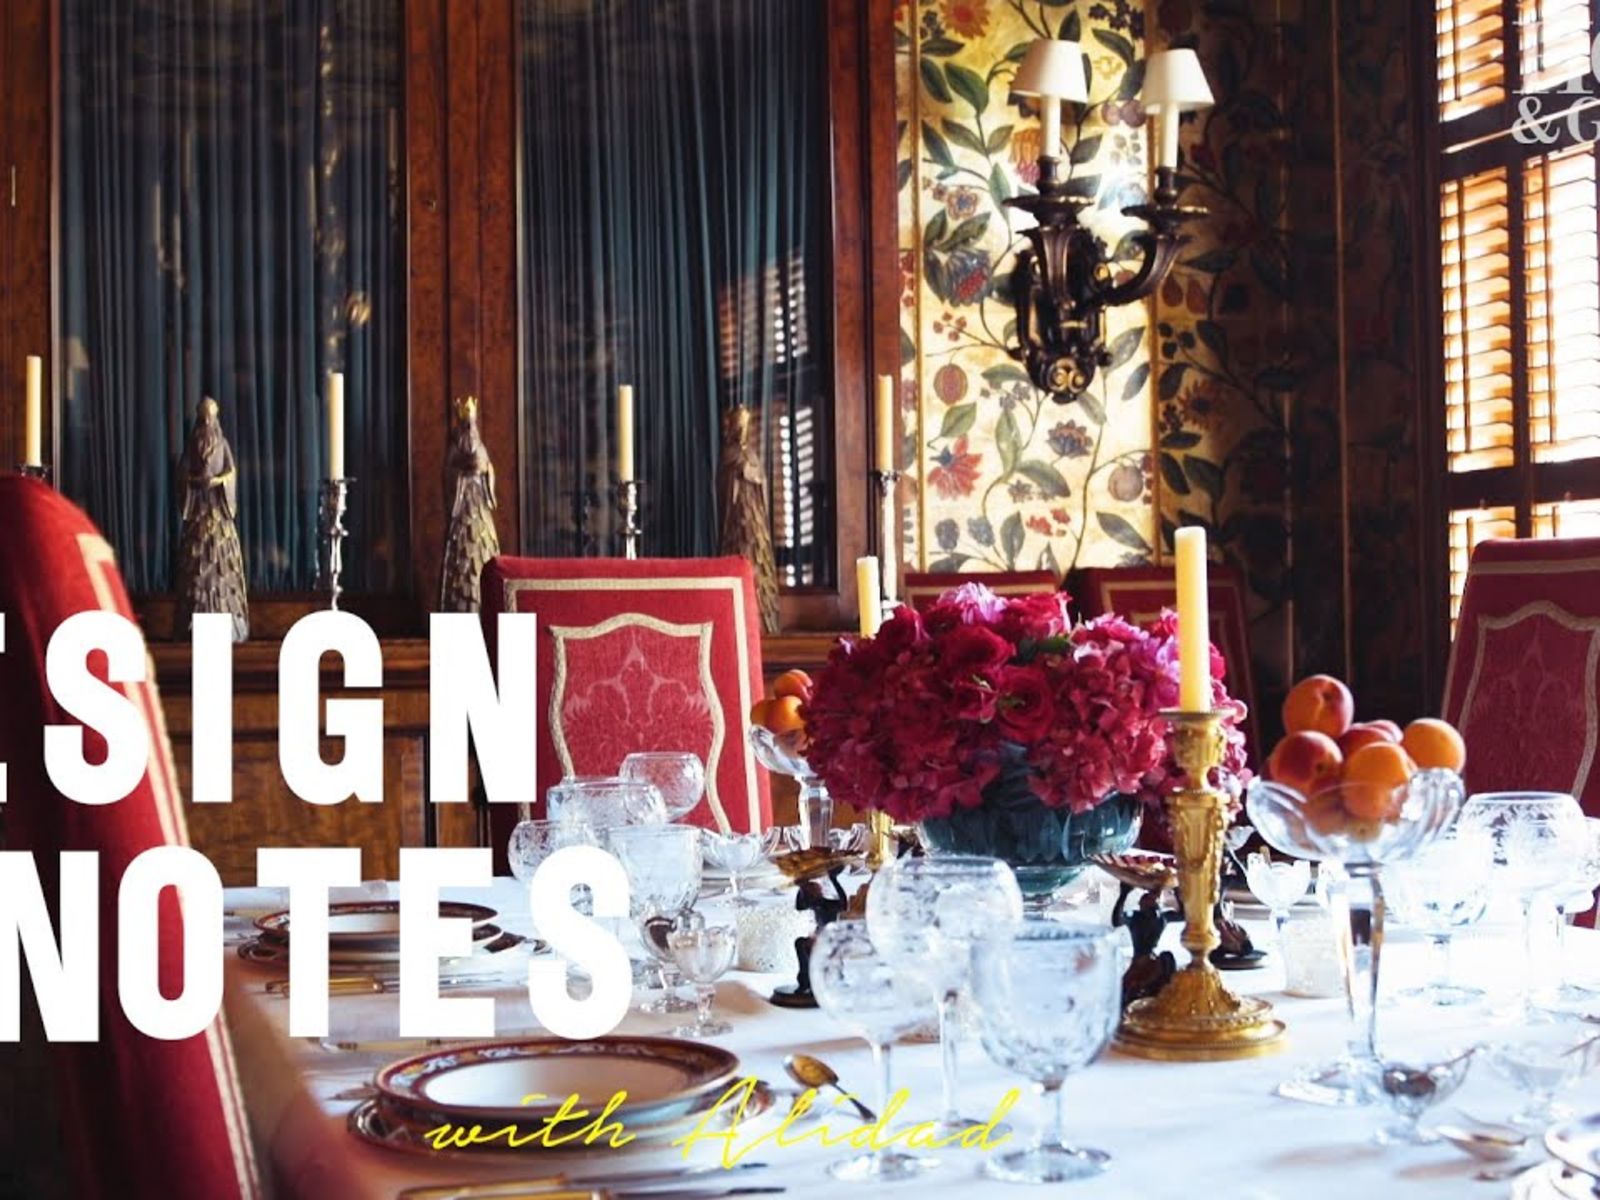 Interior designer Alidad shows us around his opulent London flat | Design Notes | House & Garden